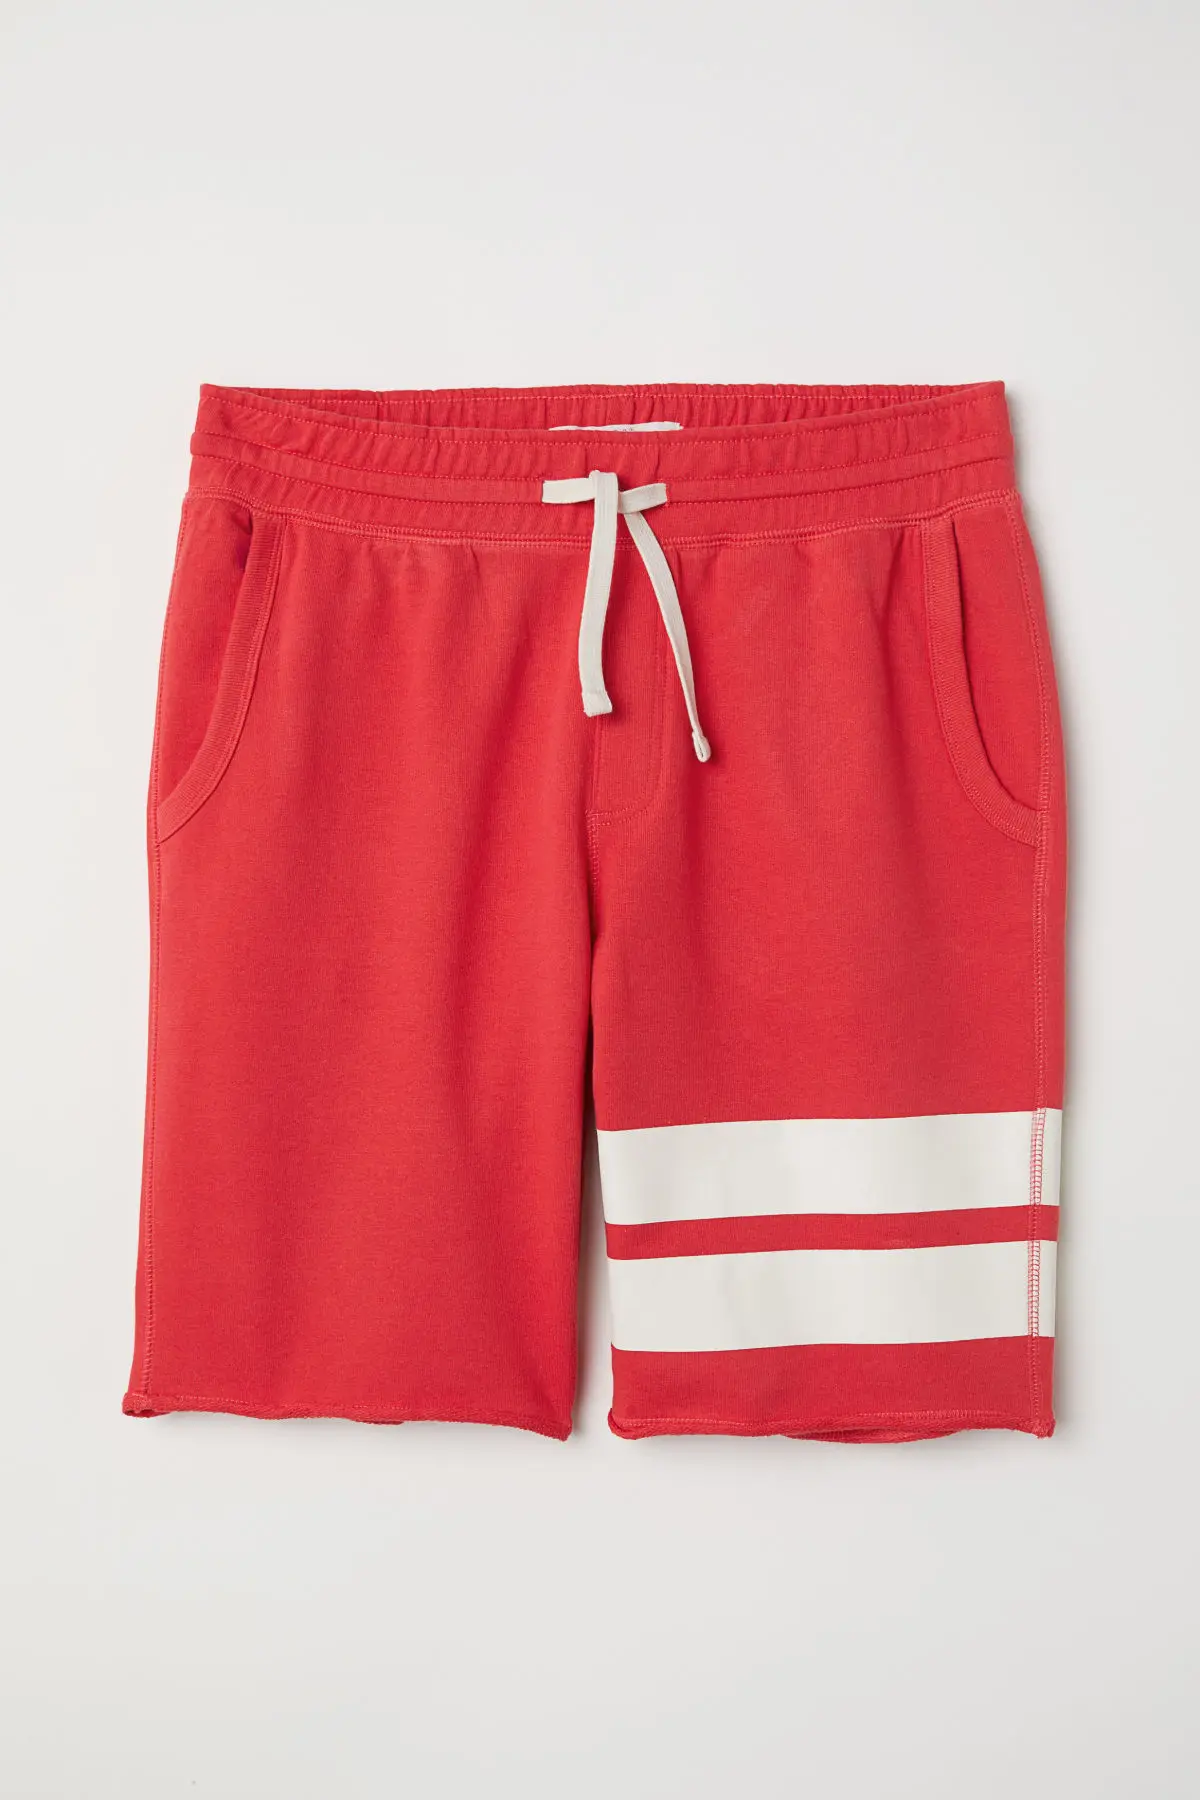 Wholesale Shorts, Buy Bulk Shorts